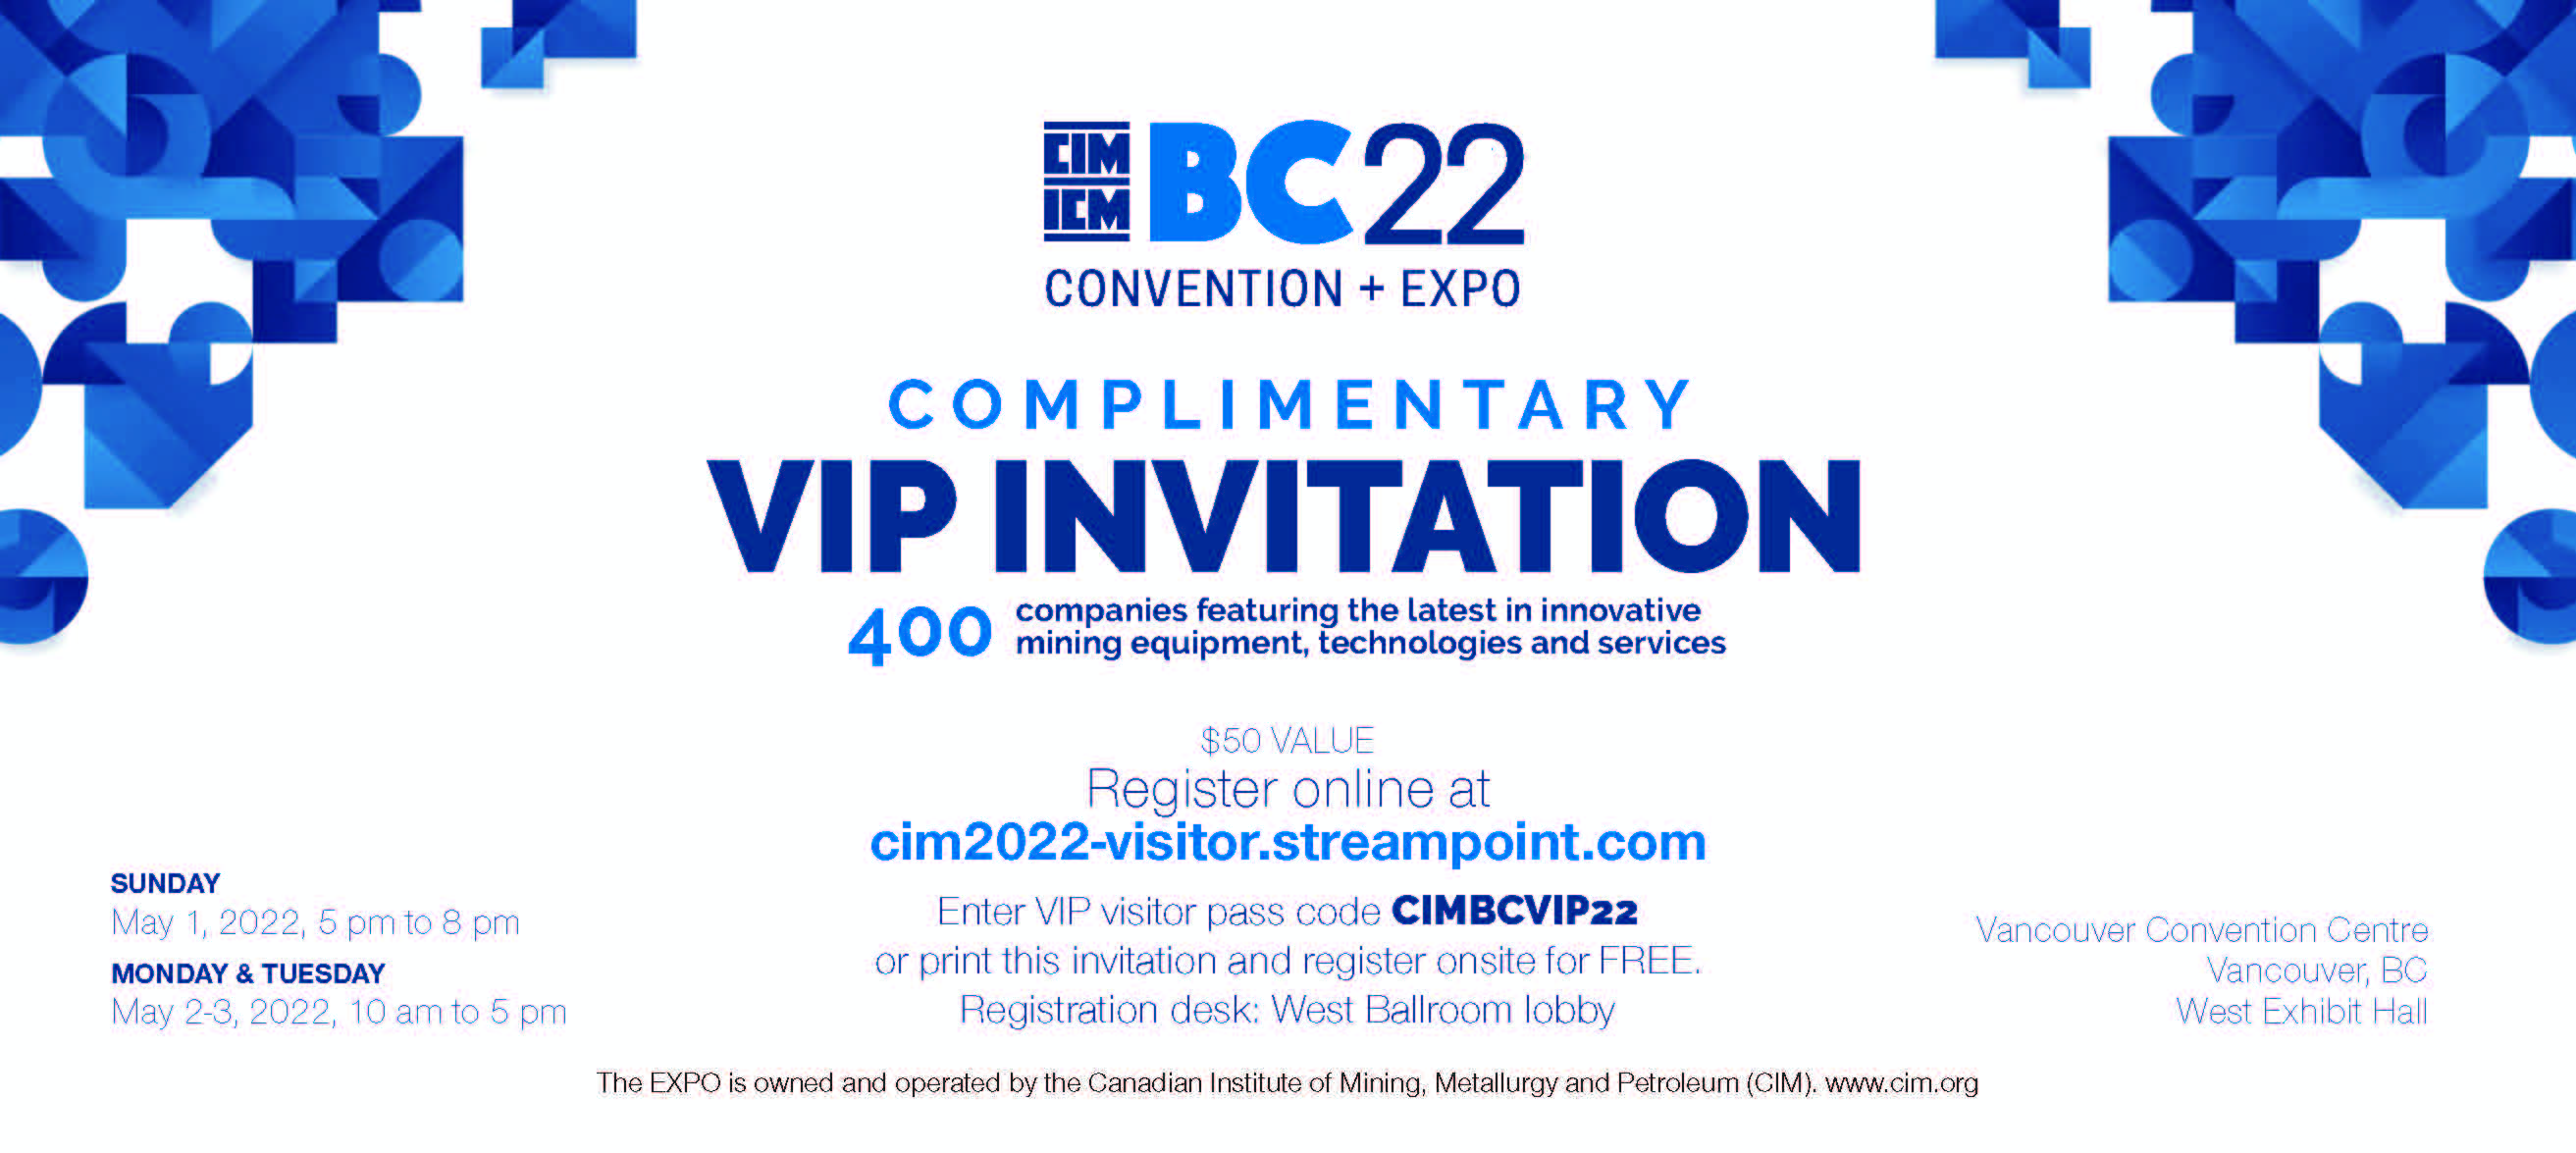 bc22 expo vip invitations page 1